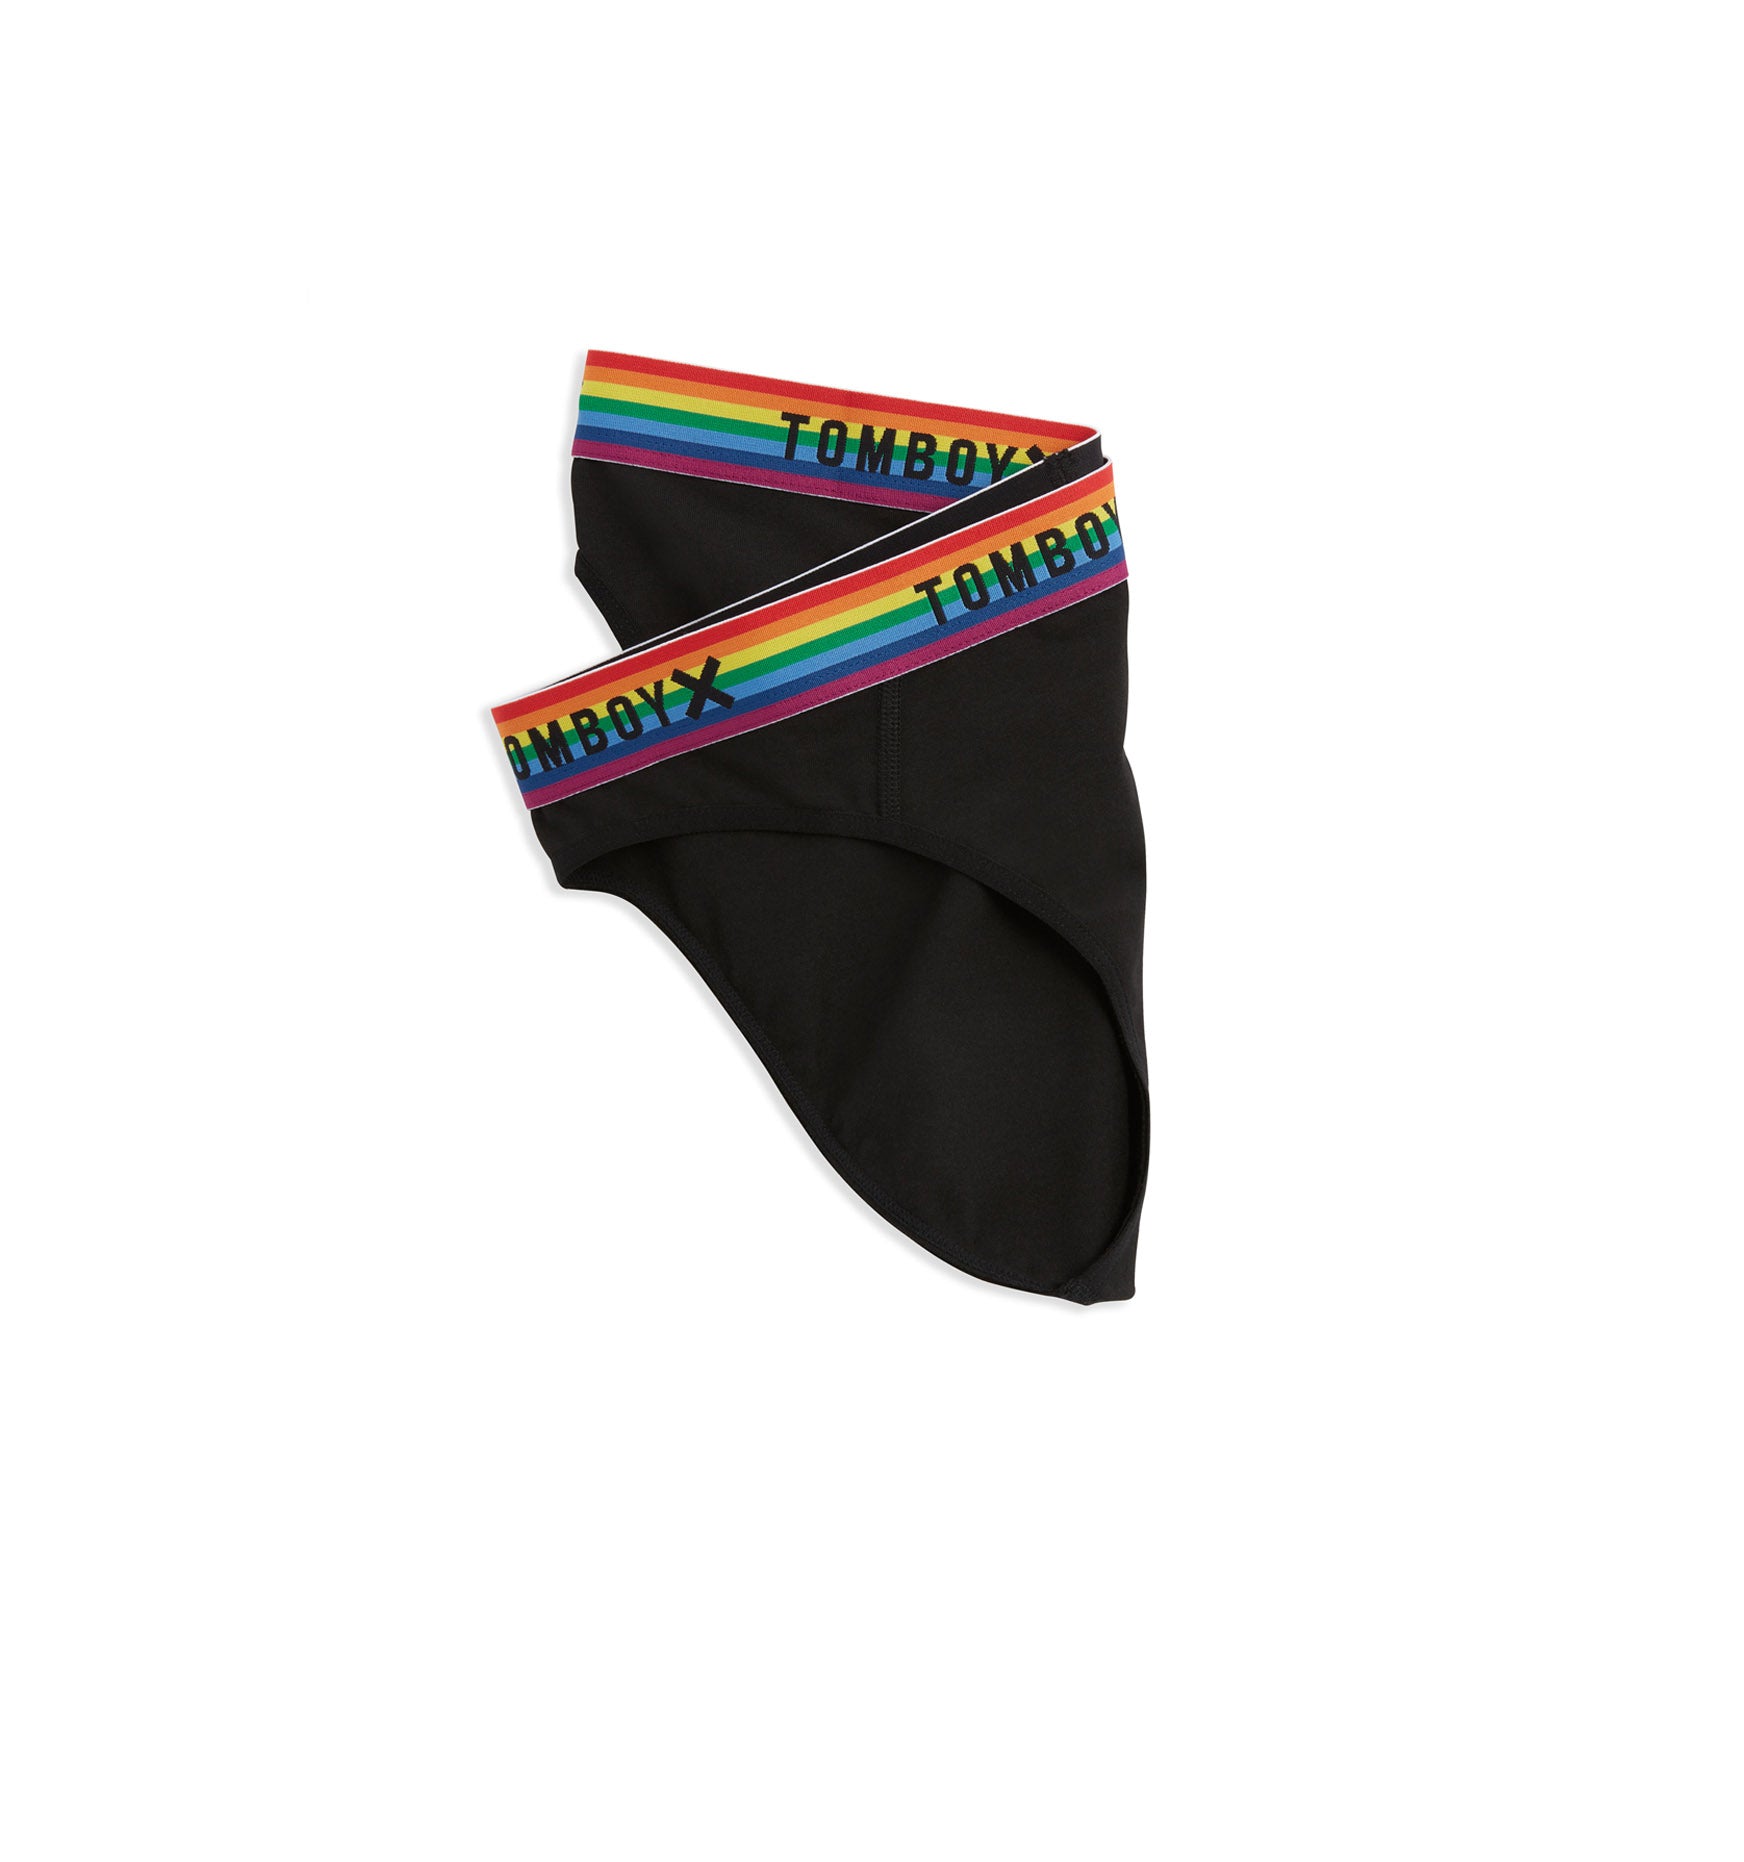 Exclusive: Bikini - Black Rainbow - Underwear- TomboyX